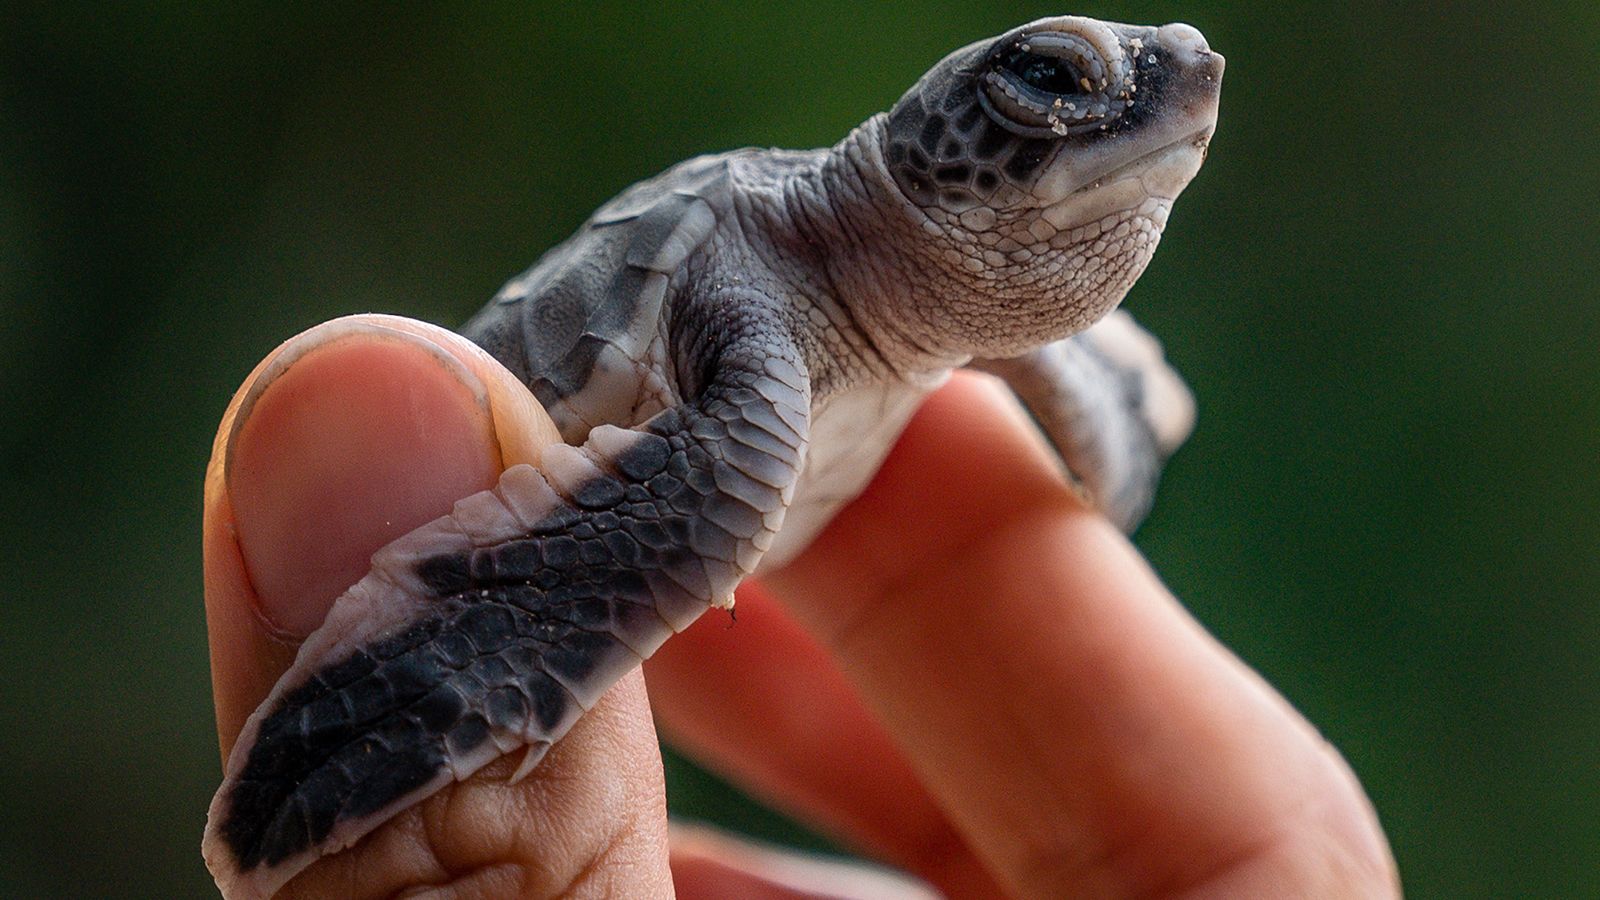 Is coronavirus helping turtles? The answer's complicated | CNN